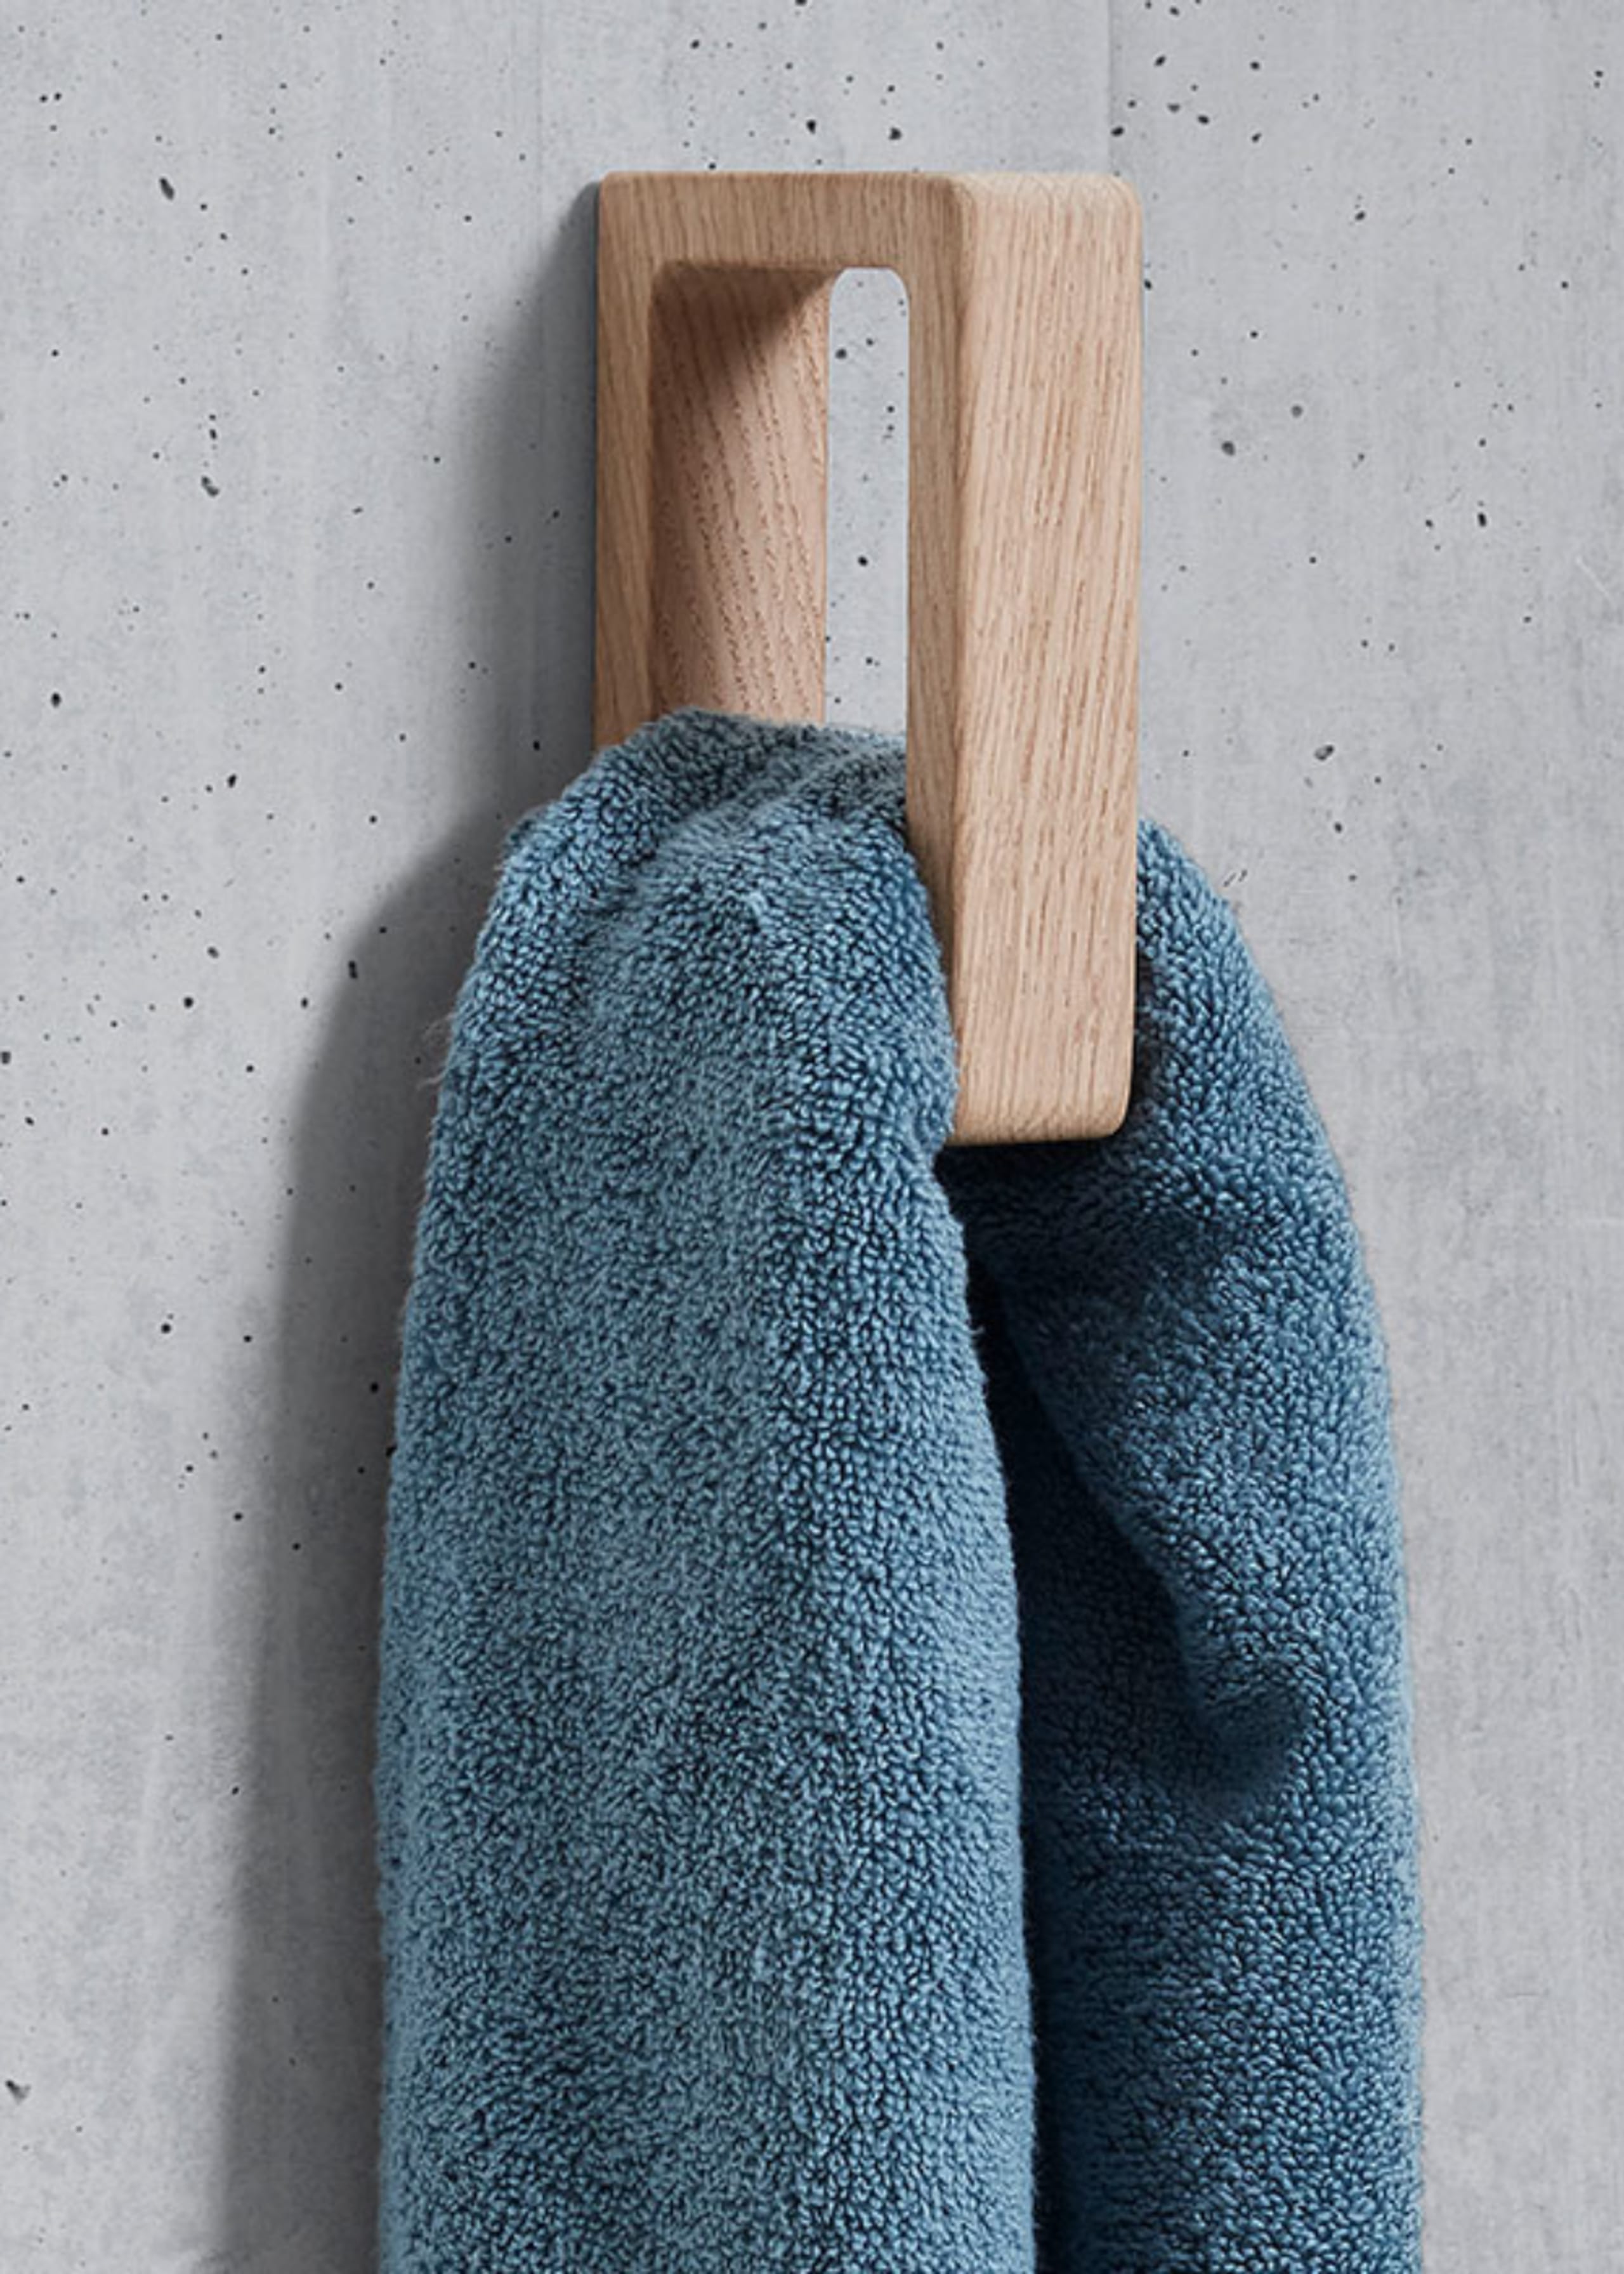 Andersen Furniture - Porte-serviette - Towel Grip - Oak Lacquer